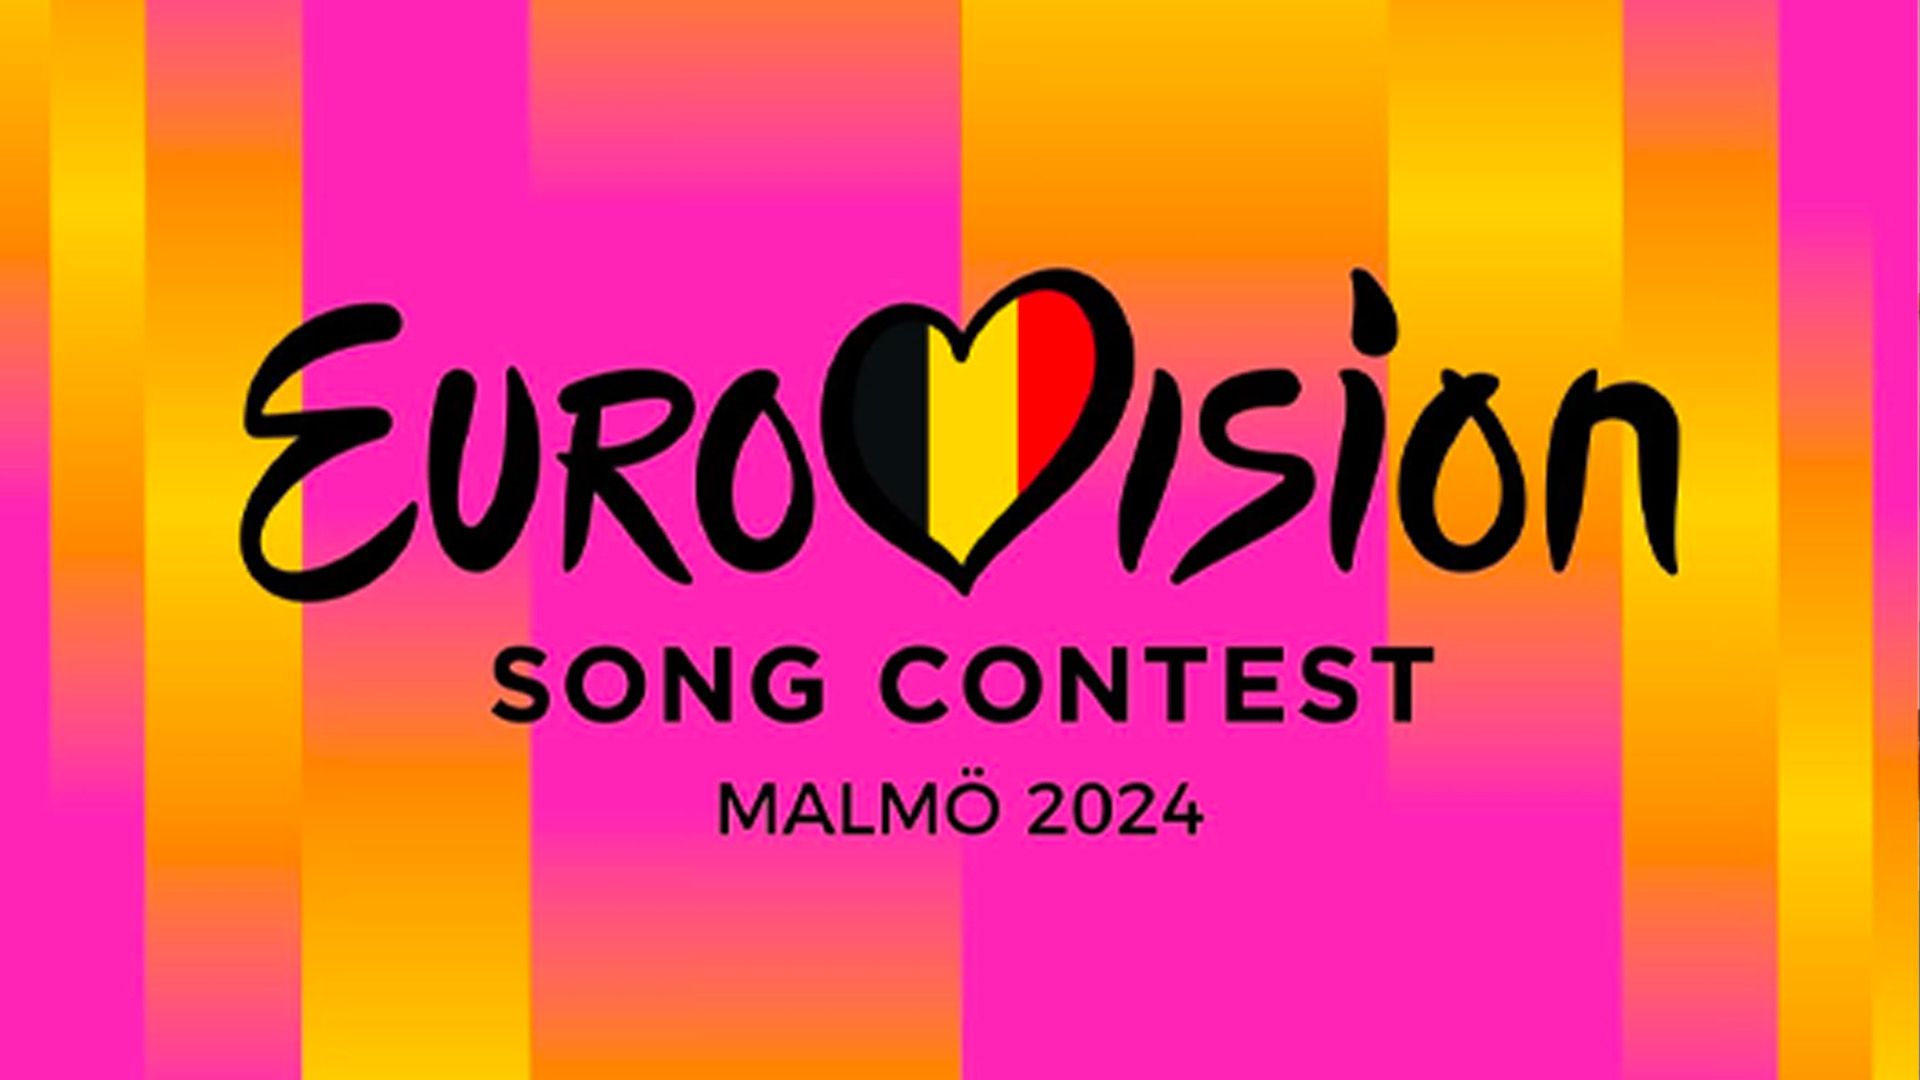 Concours Eurovision de la chanson 2024